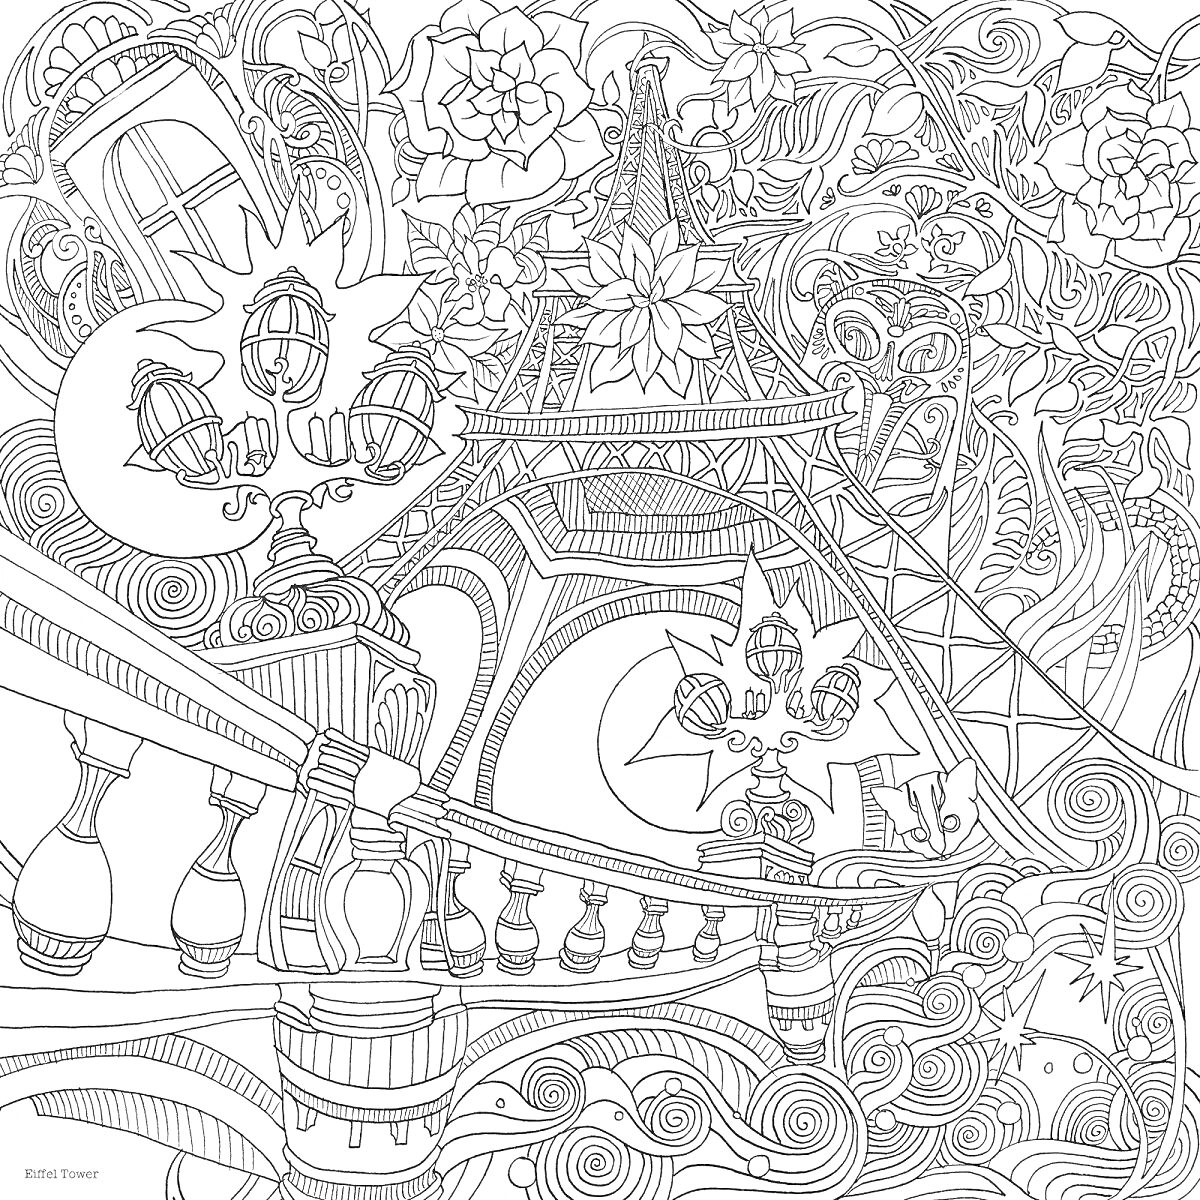 На раскраске изображено: Антистресс, Эйфелева башня, Цветы, Балкон